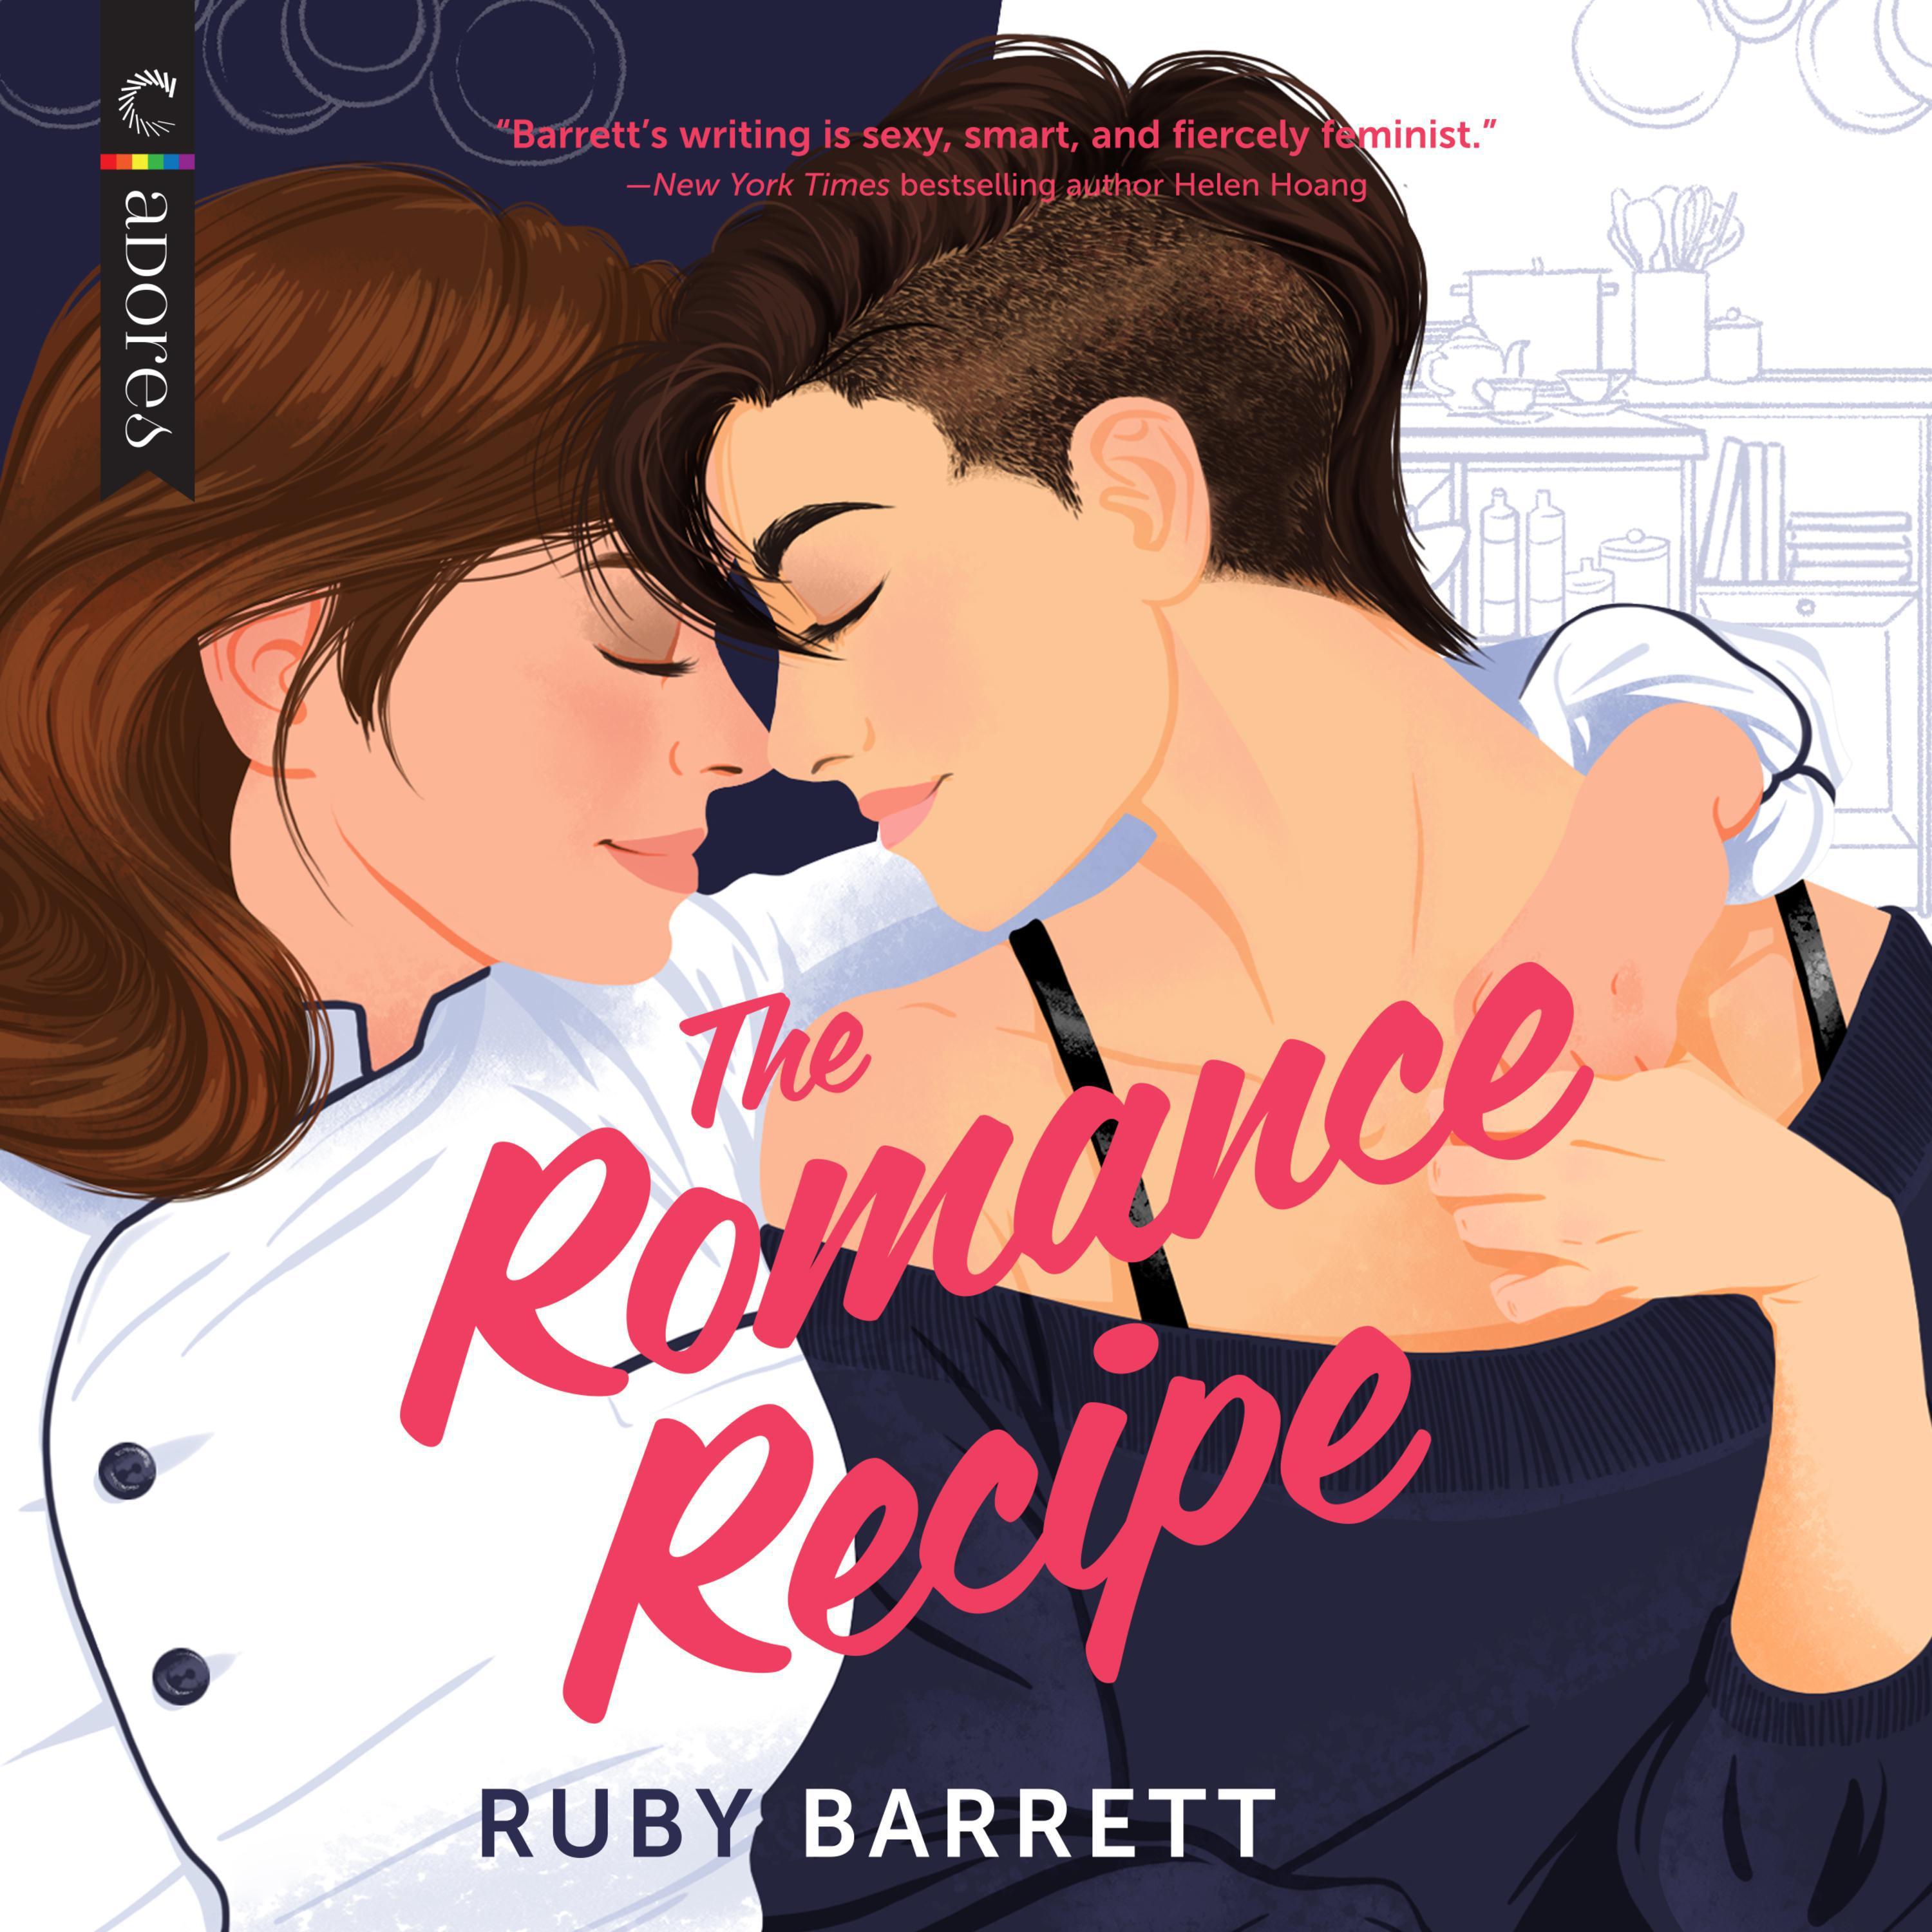 Natalie Naudus, Ruby Barrett, Chelsea Stephens: The Romance Recipe (AudiobookFormat, 2022, Harper Collins)